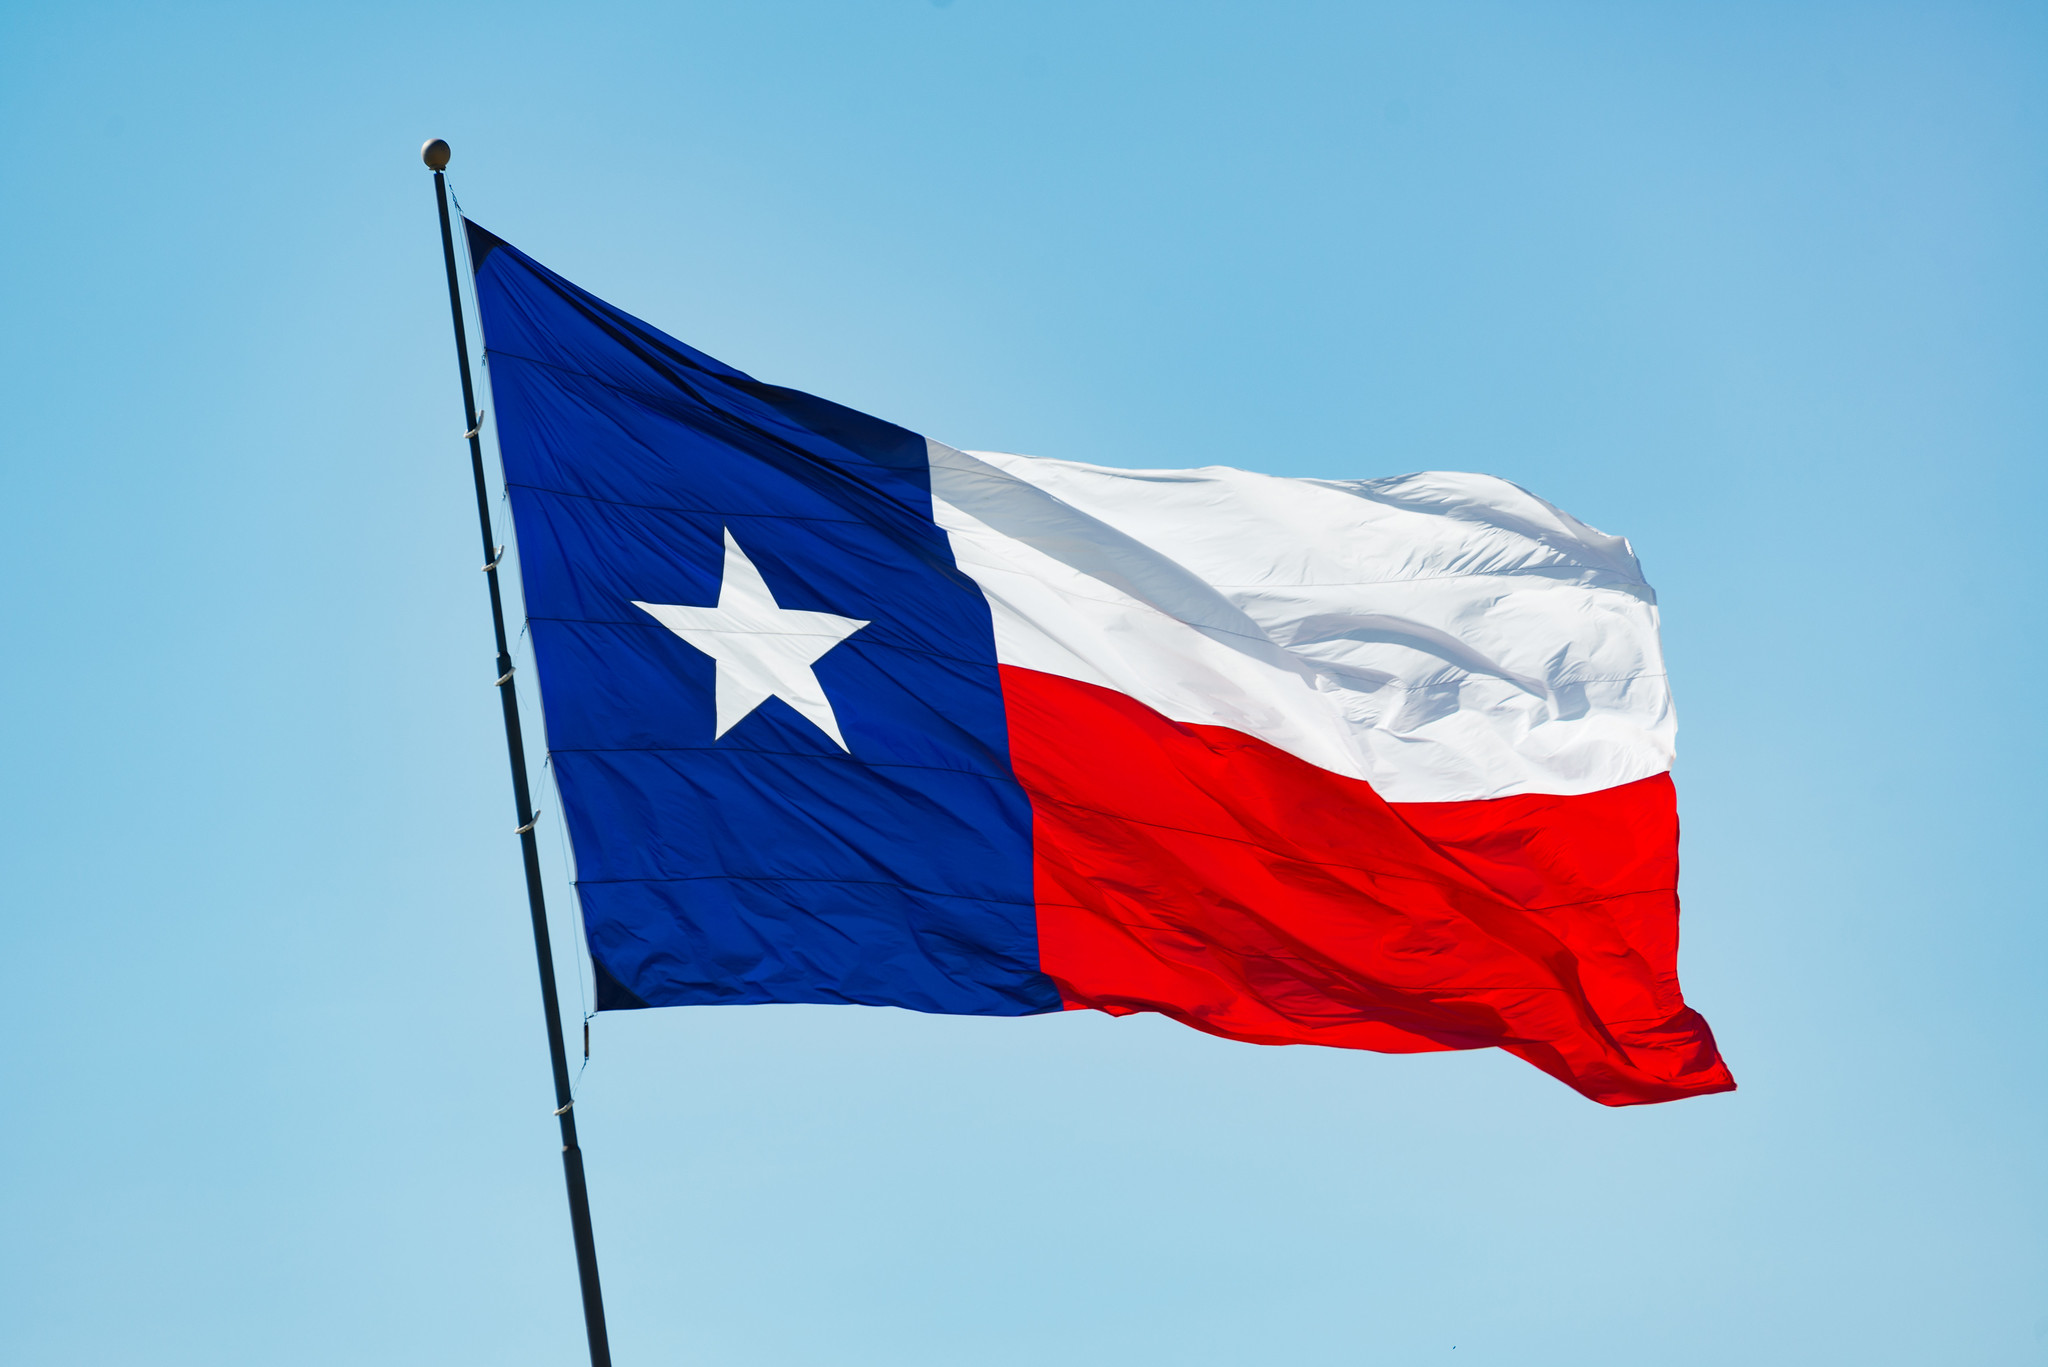 Factcheck Can Texas secede from the union? Texas Standard